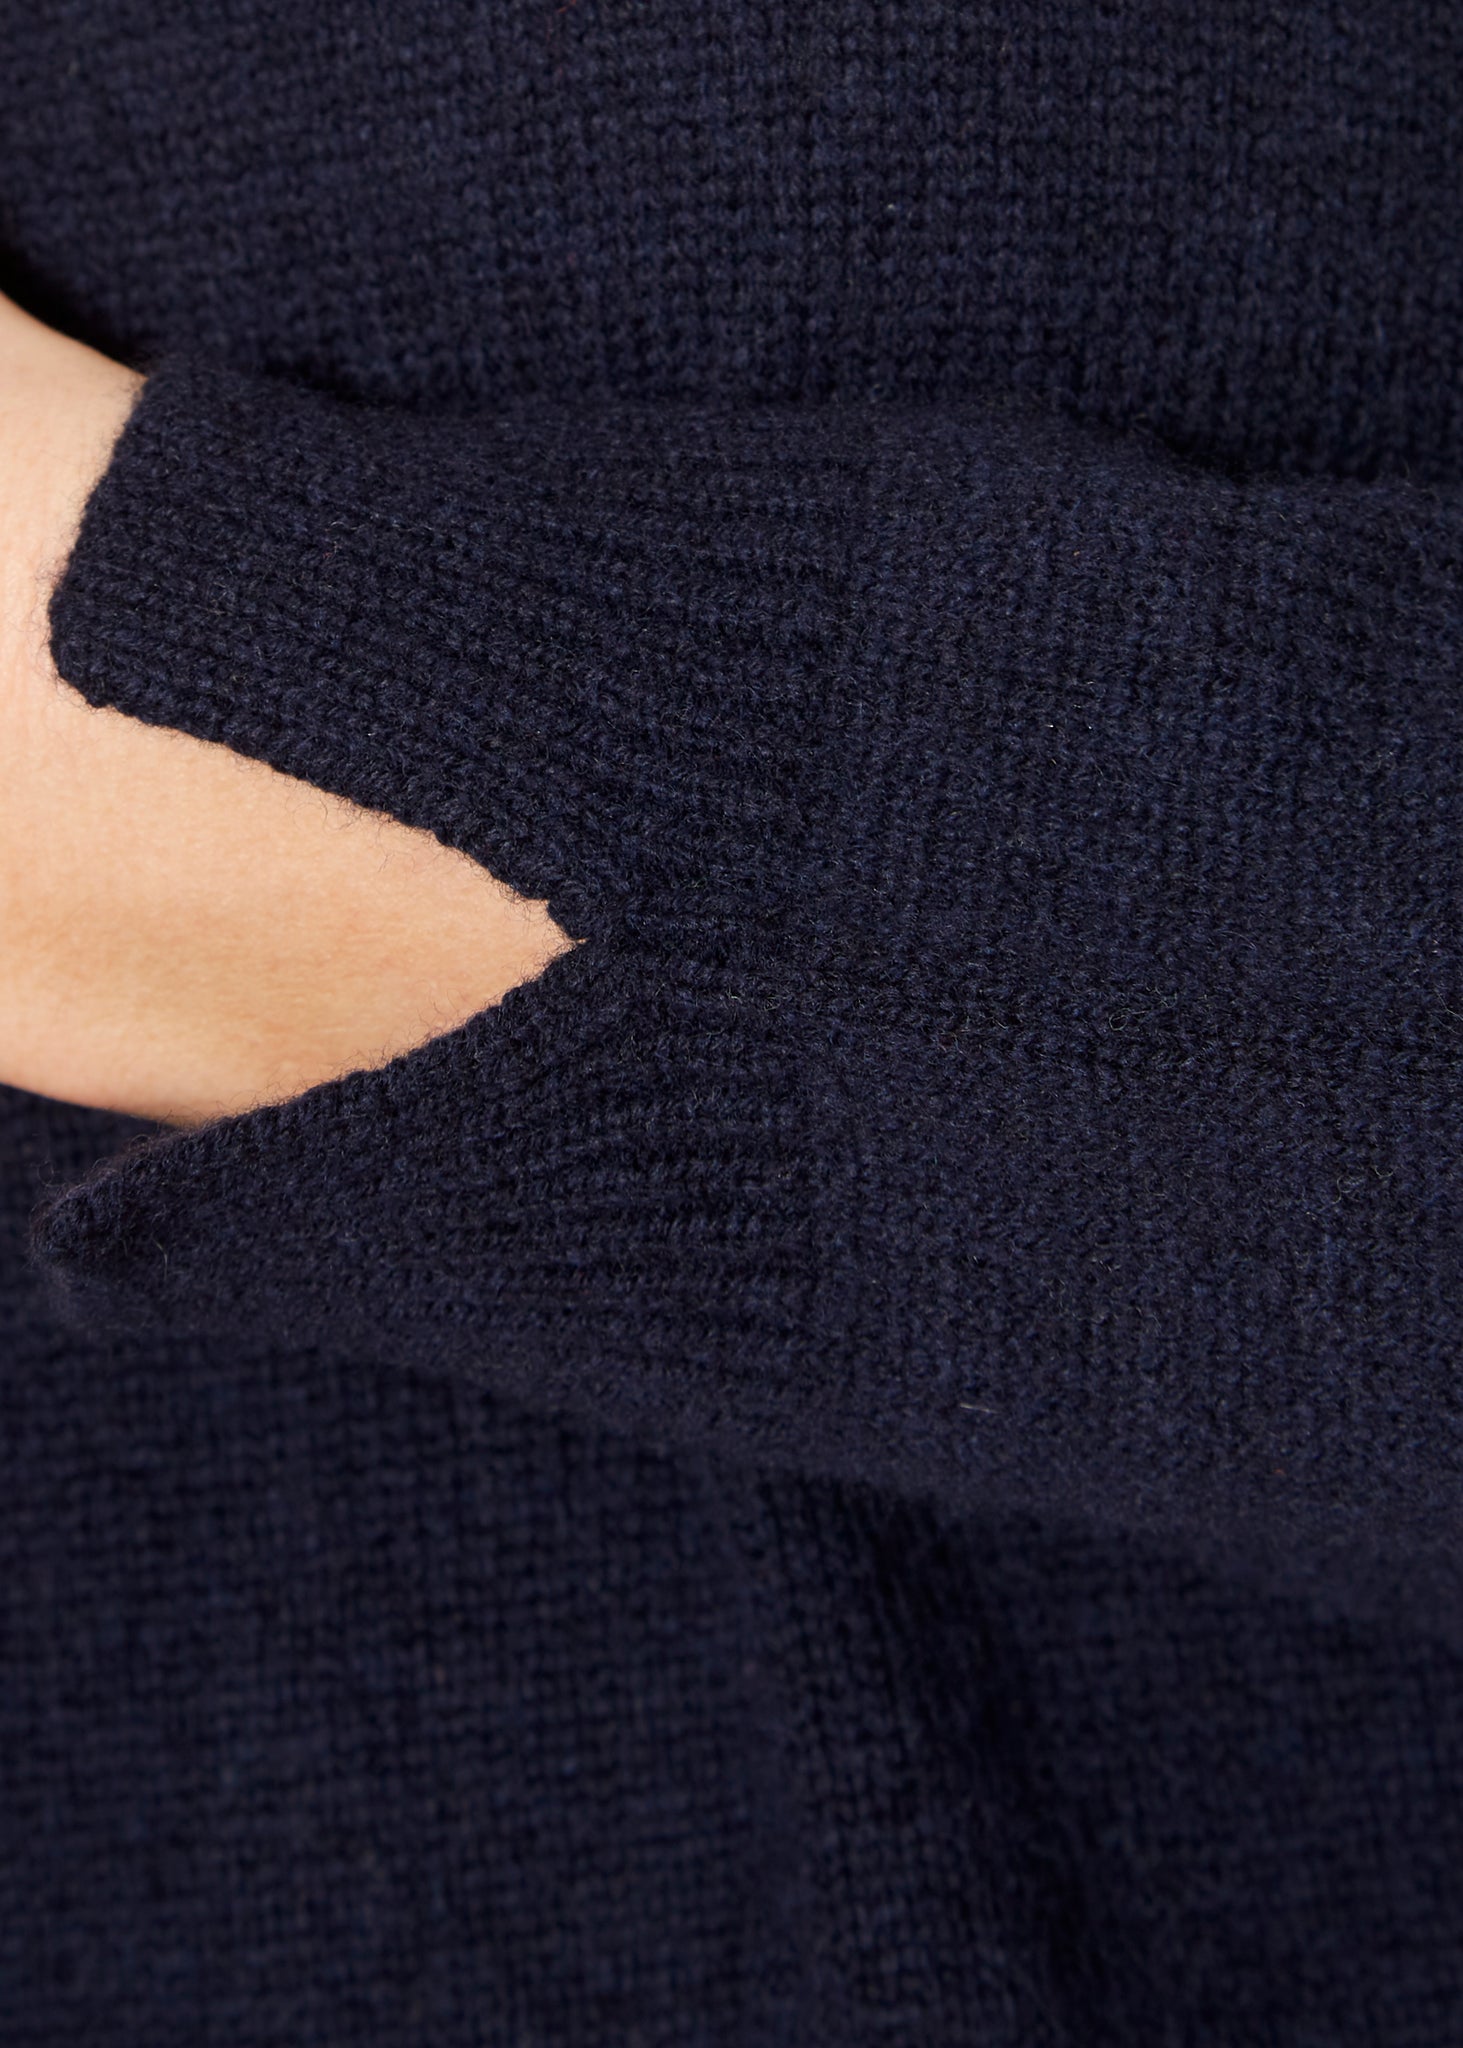 Jessimara Knitwear Tavi Sweater Navy Marl